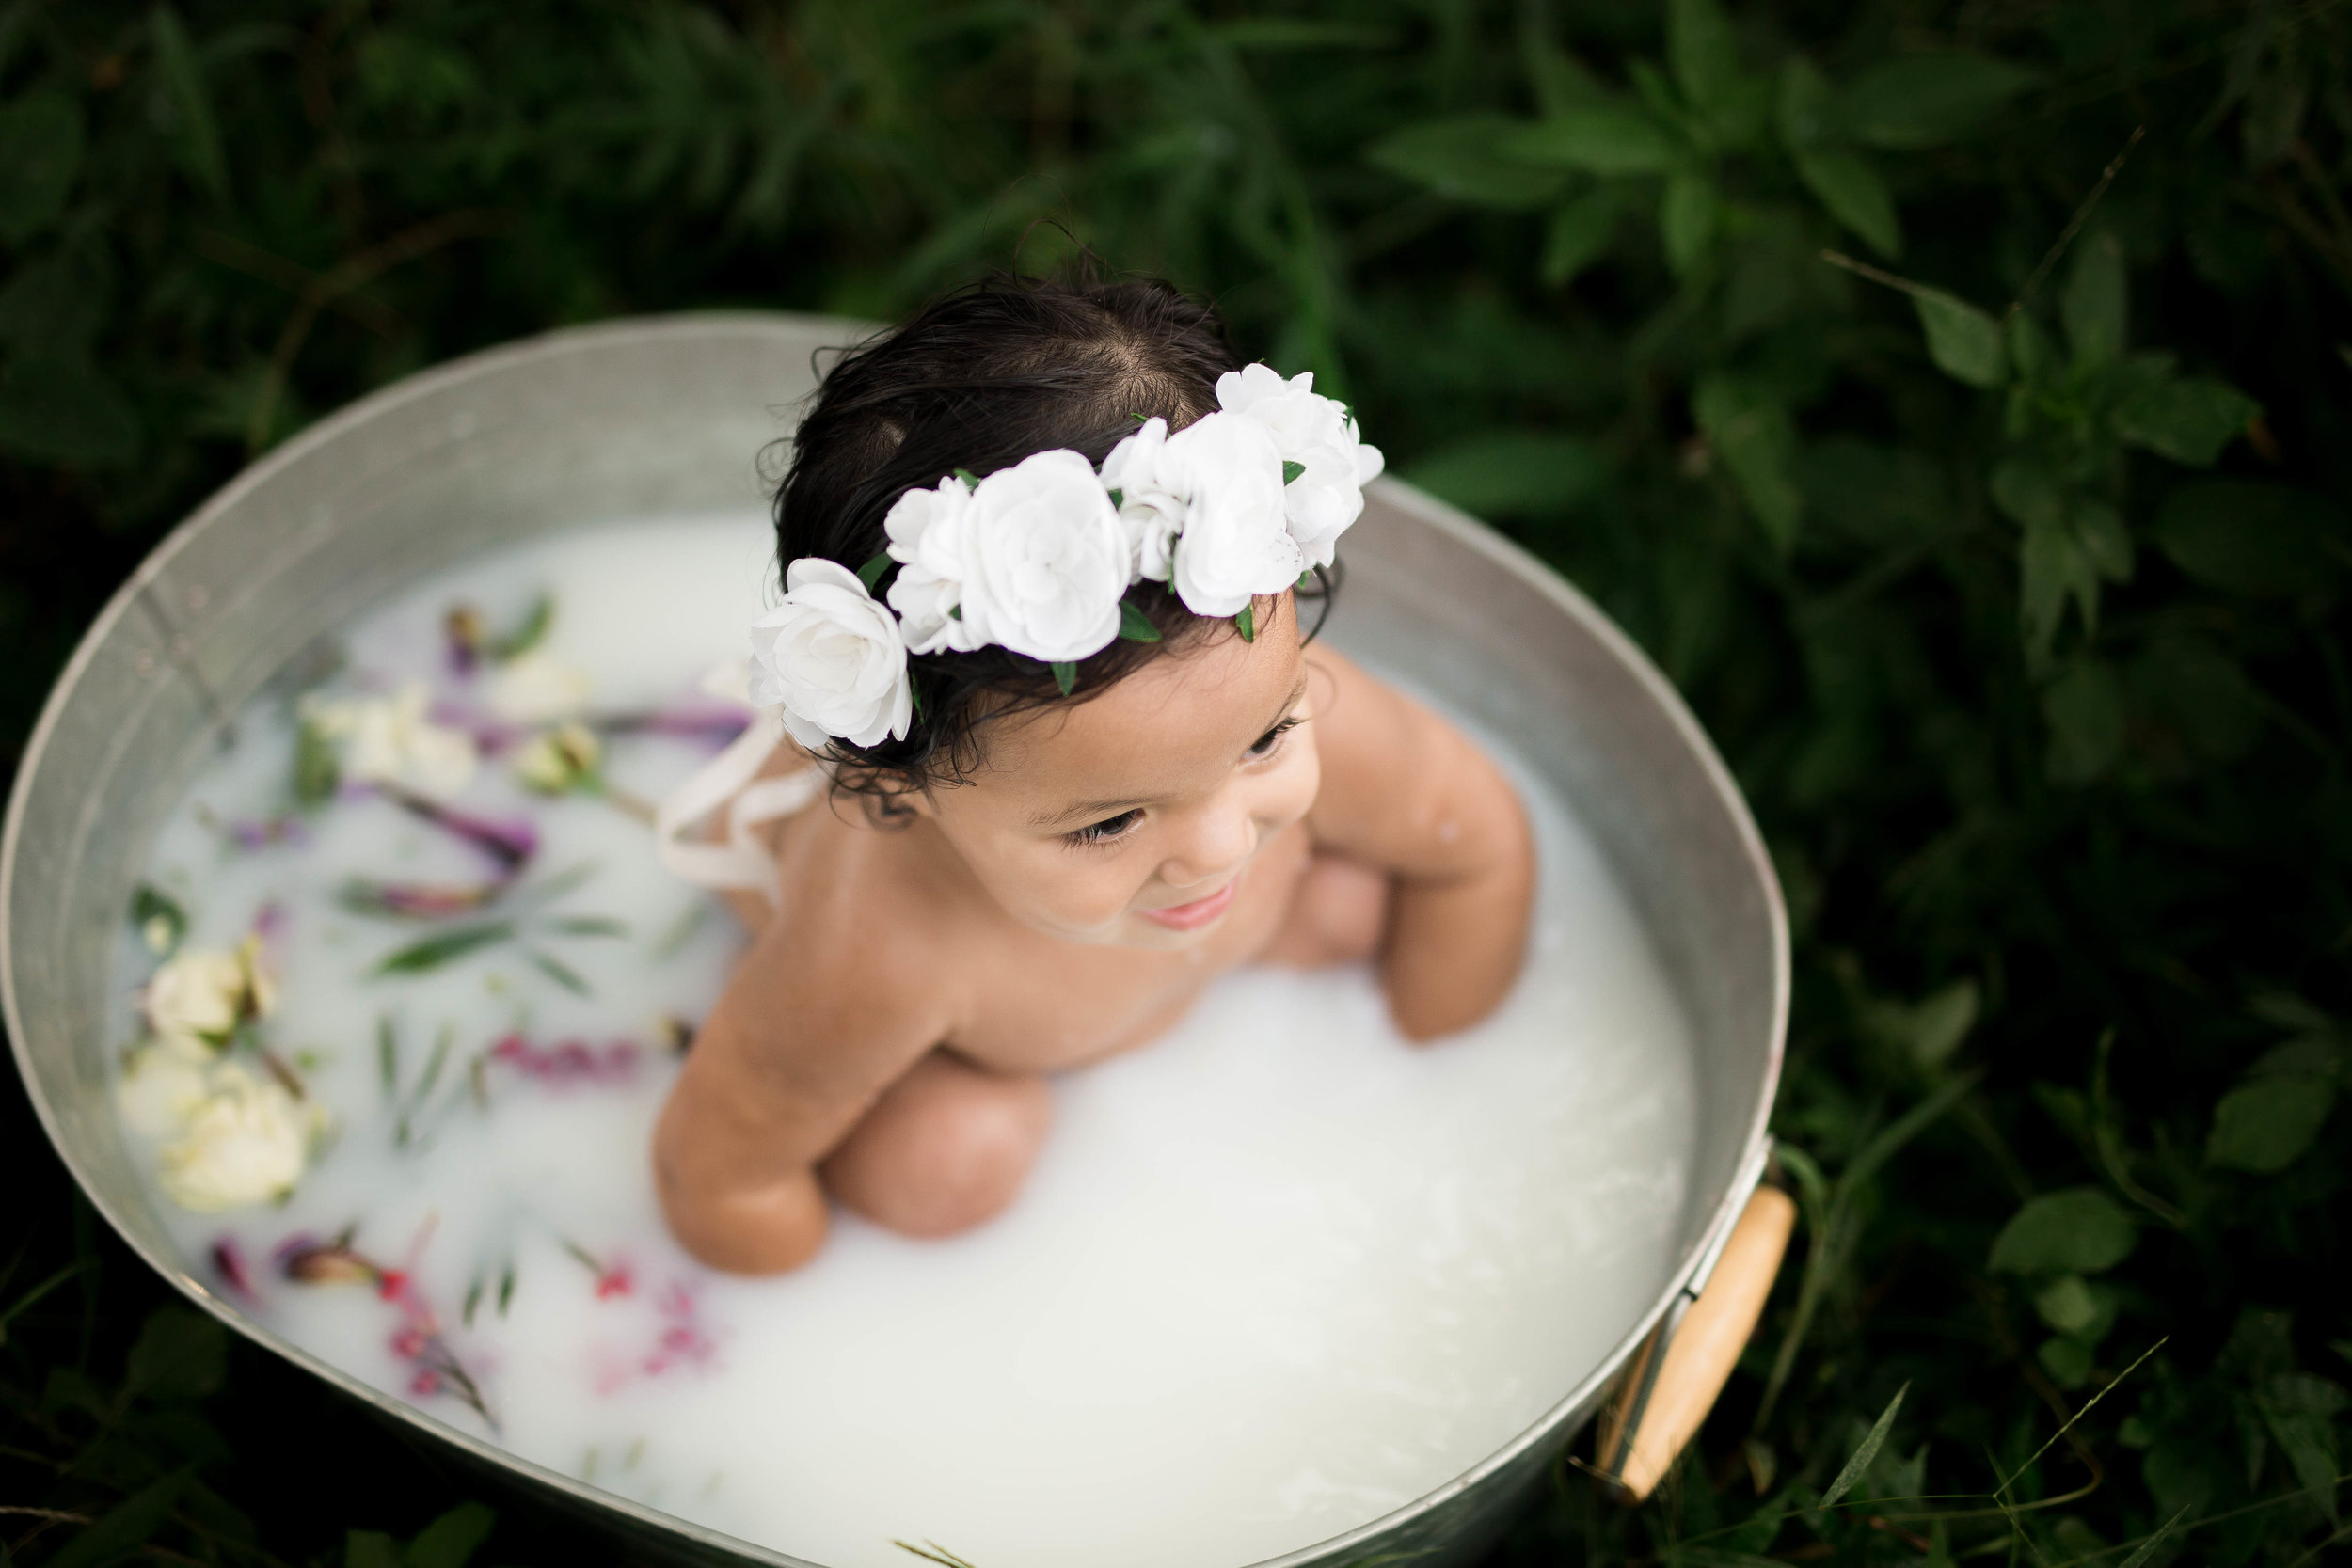 milk bath photo shoot